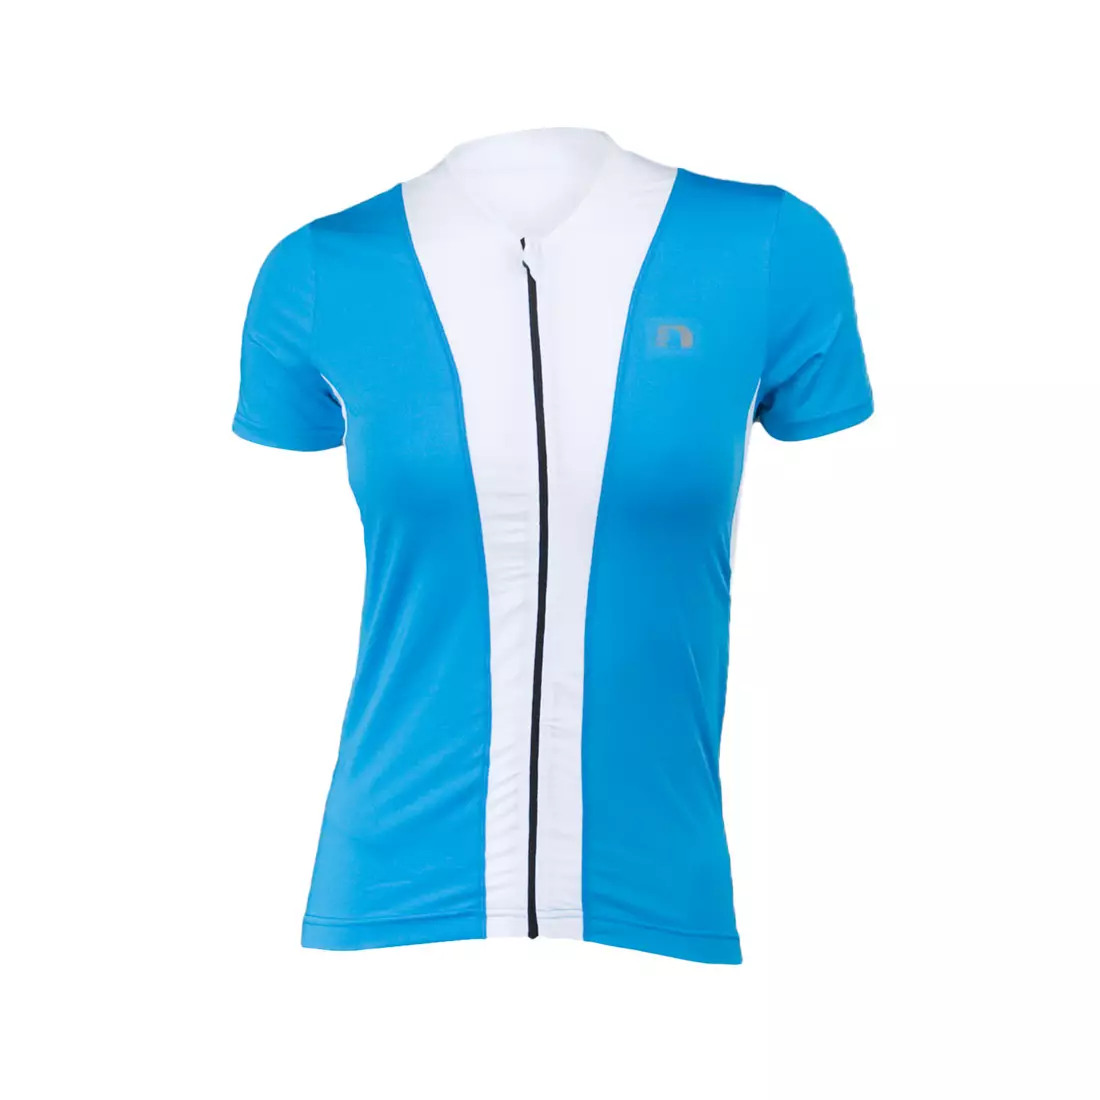 NEWLINE BIKE STRETCH JERSEY - women's cycling jersey 20616-403